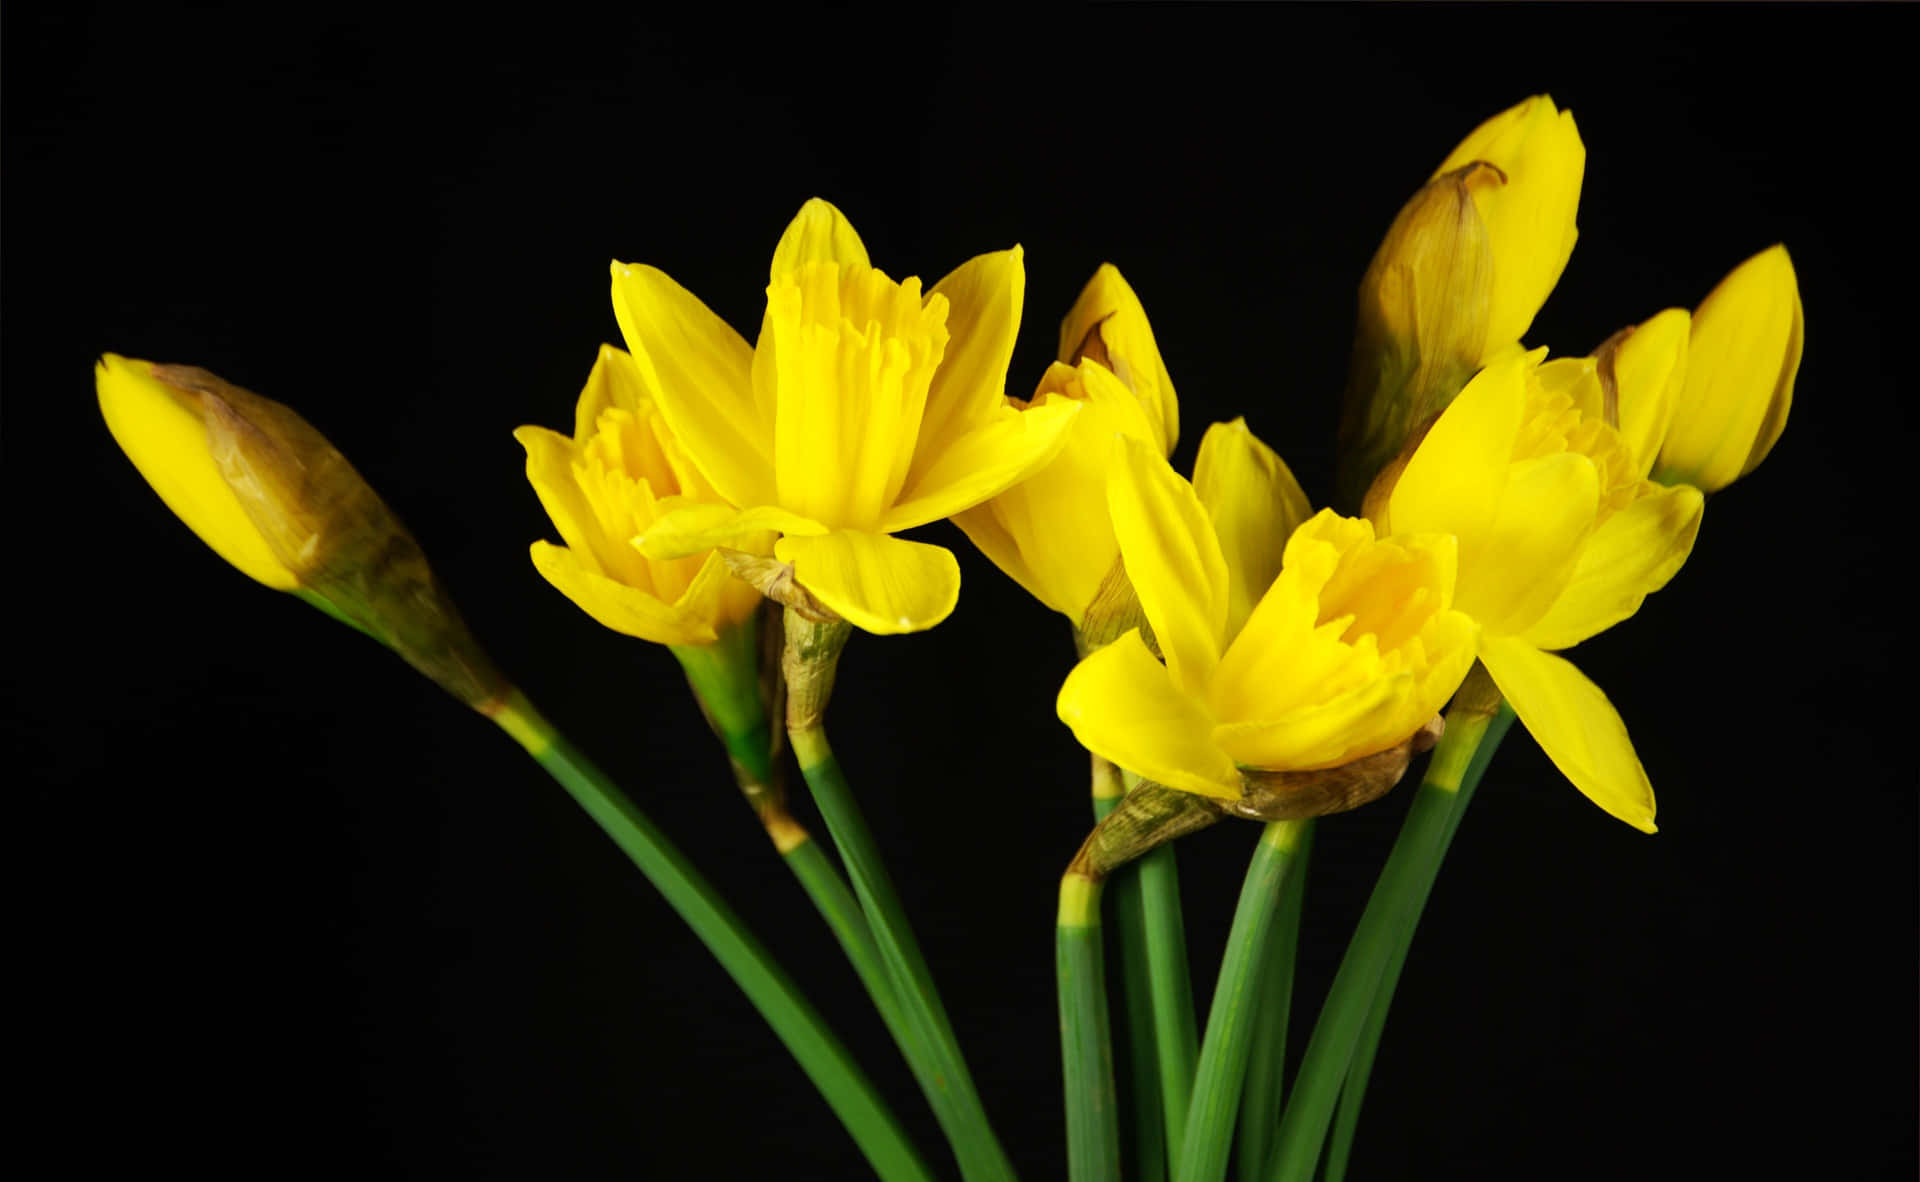 Vibrant Yellow Daffodils in Full Bloom Wallpaper